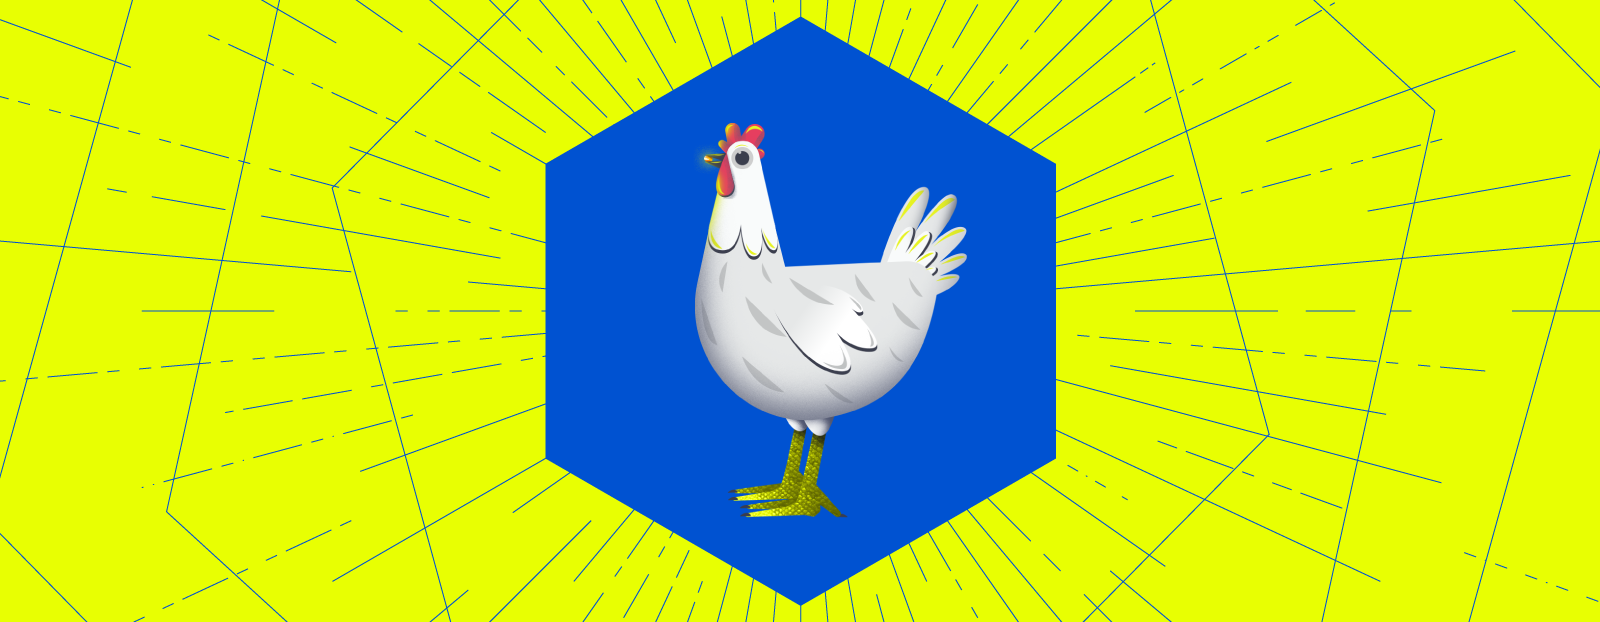 Illustrated chicken